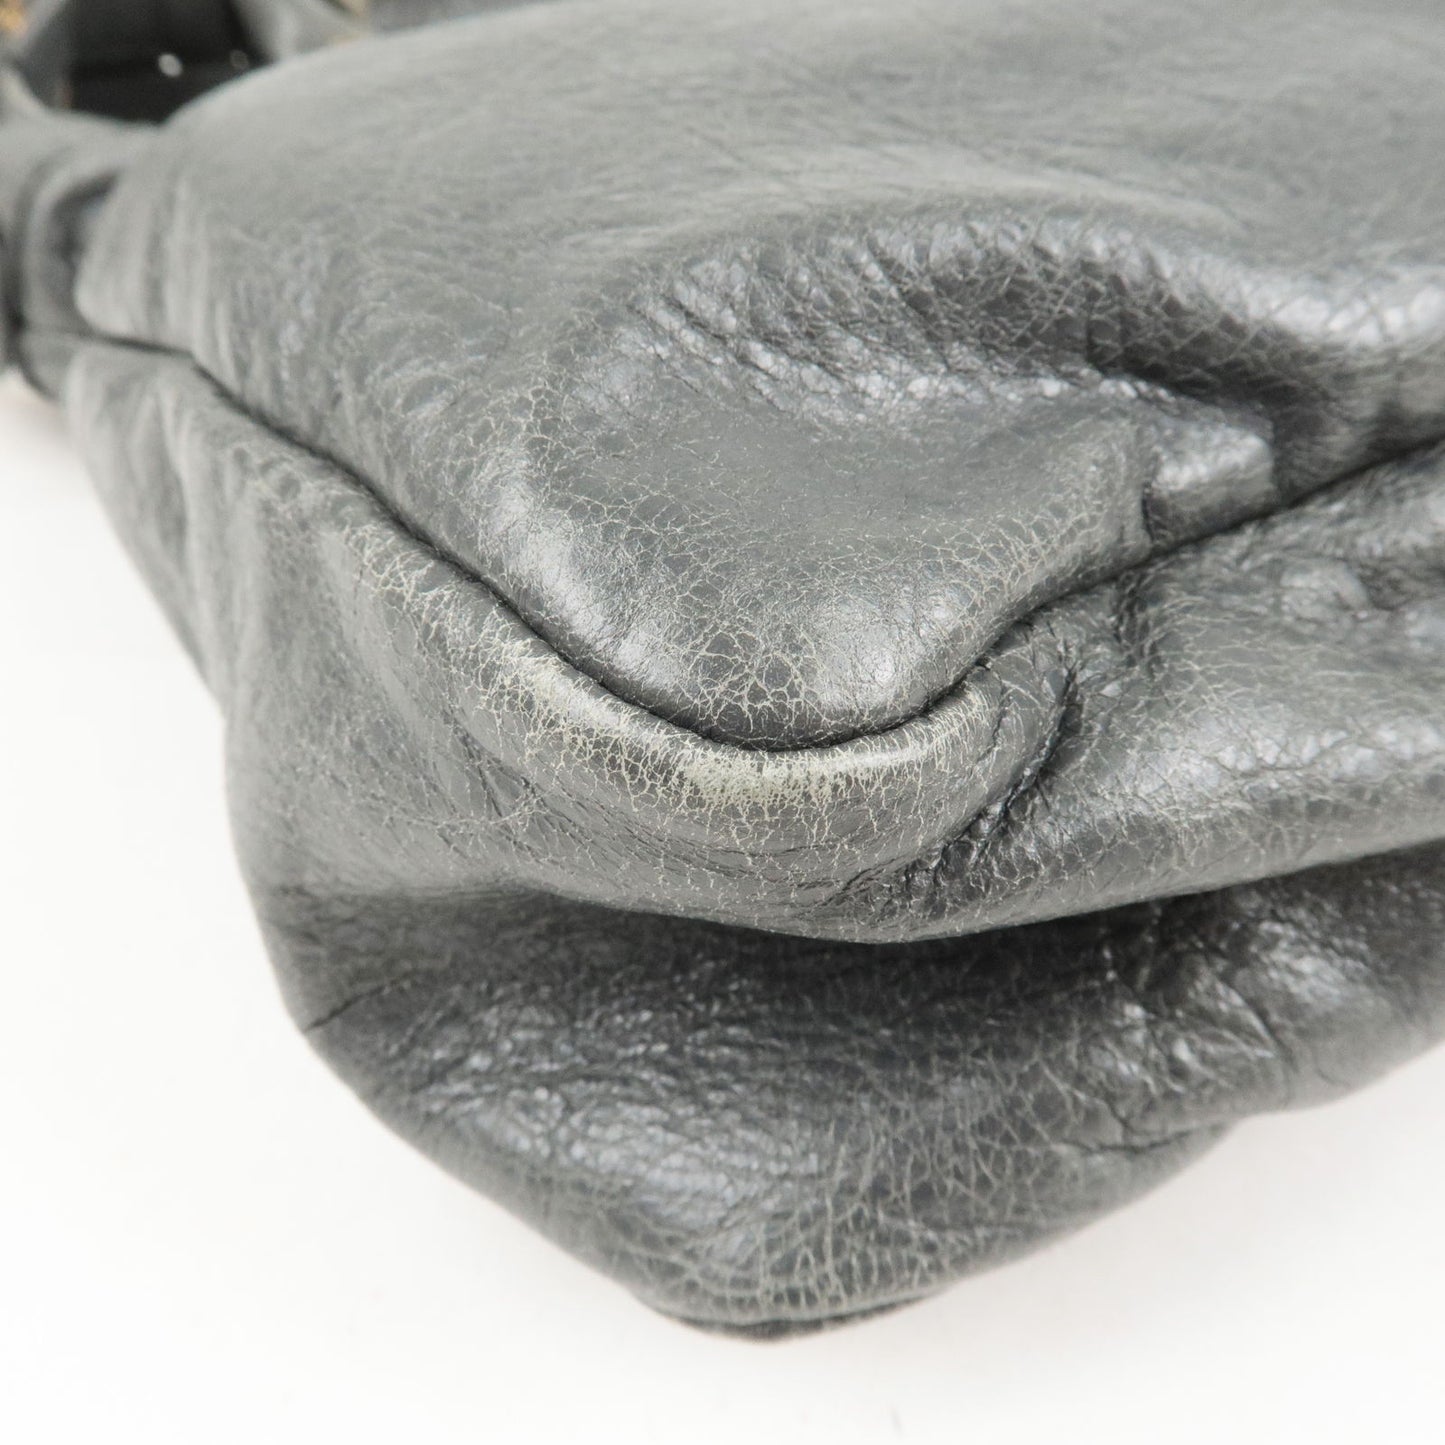 BALENCIAGA The Giant Town Leather 2Way Hand Bag Gray 285434